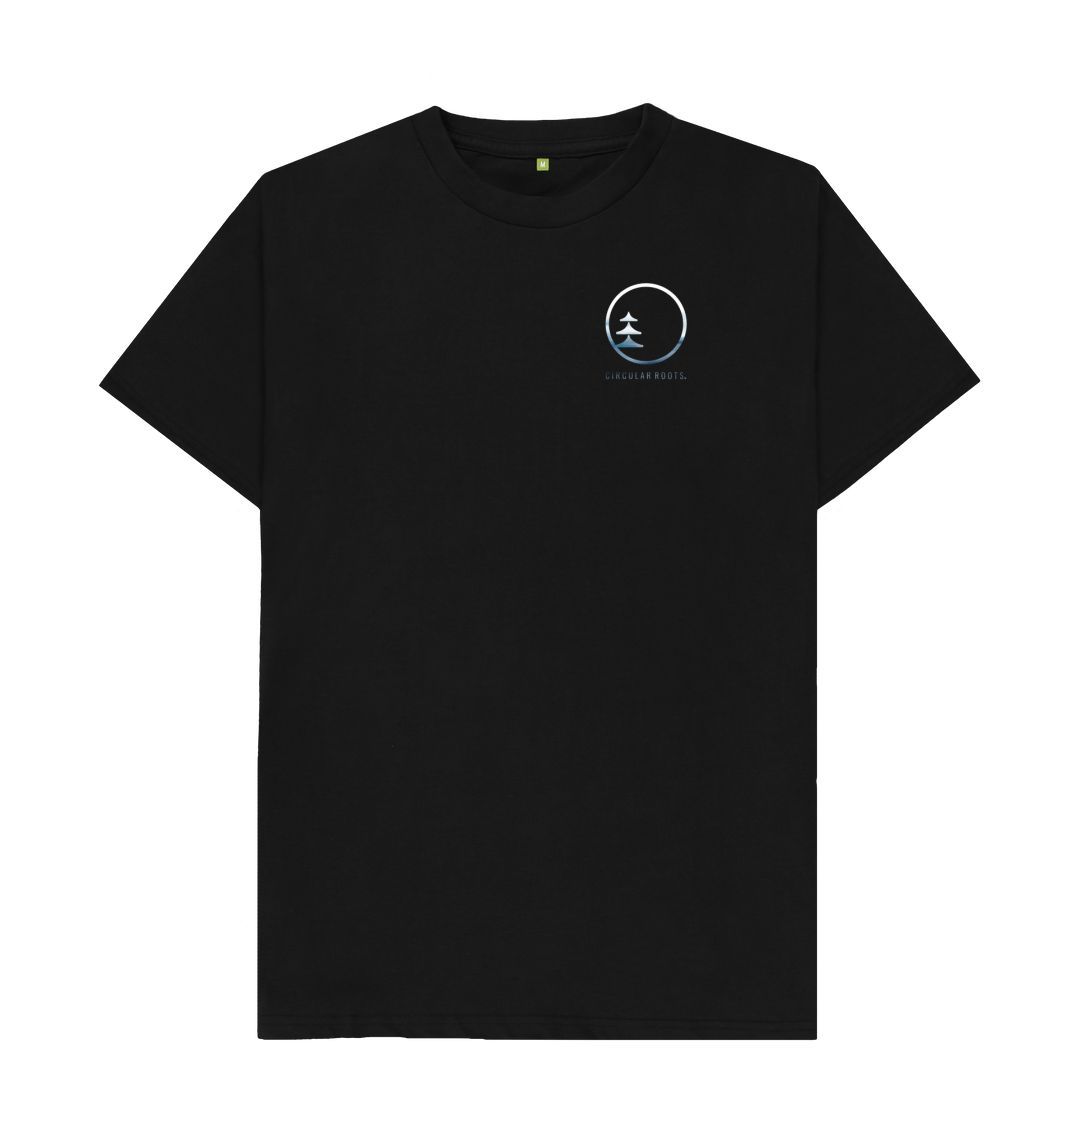 Black Circular Basics - Small Ocean logo tee